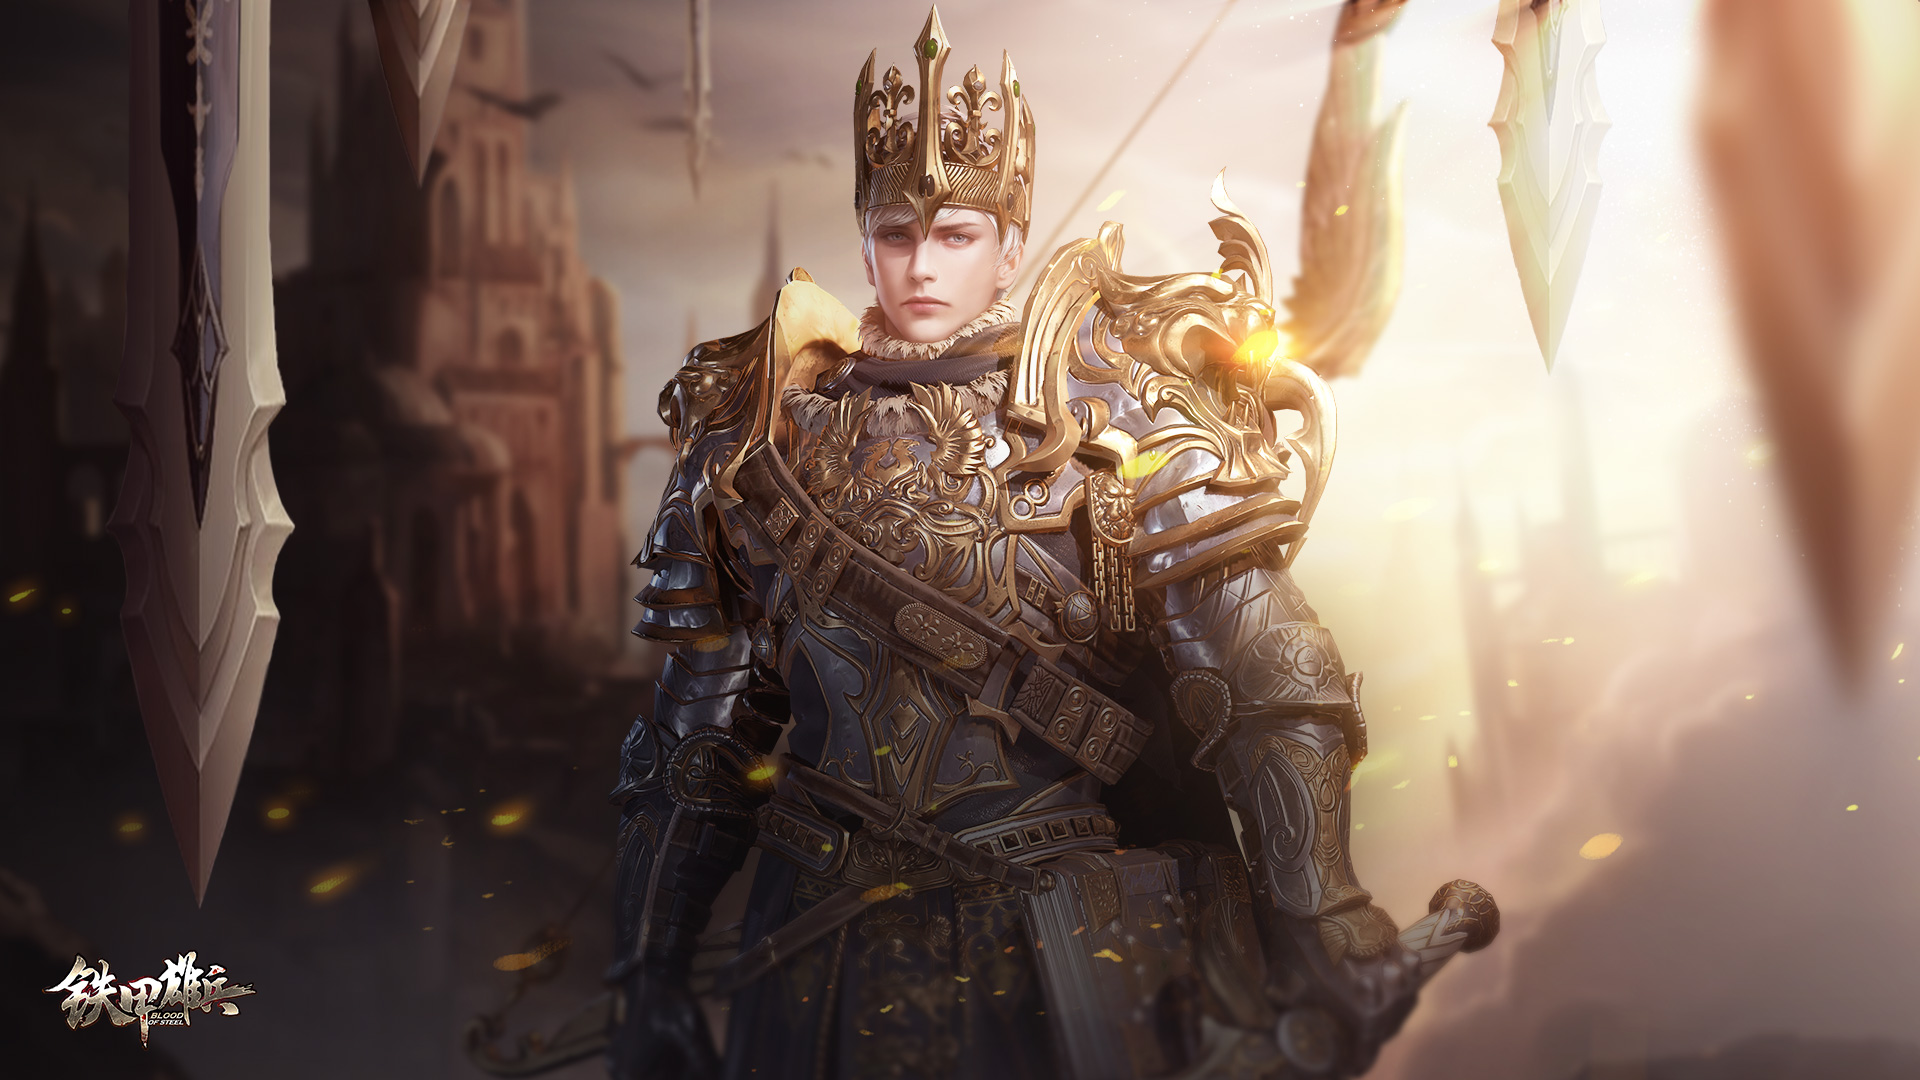 General 1920x1080 Blood of Steel crown fantasy art armor PC gaming